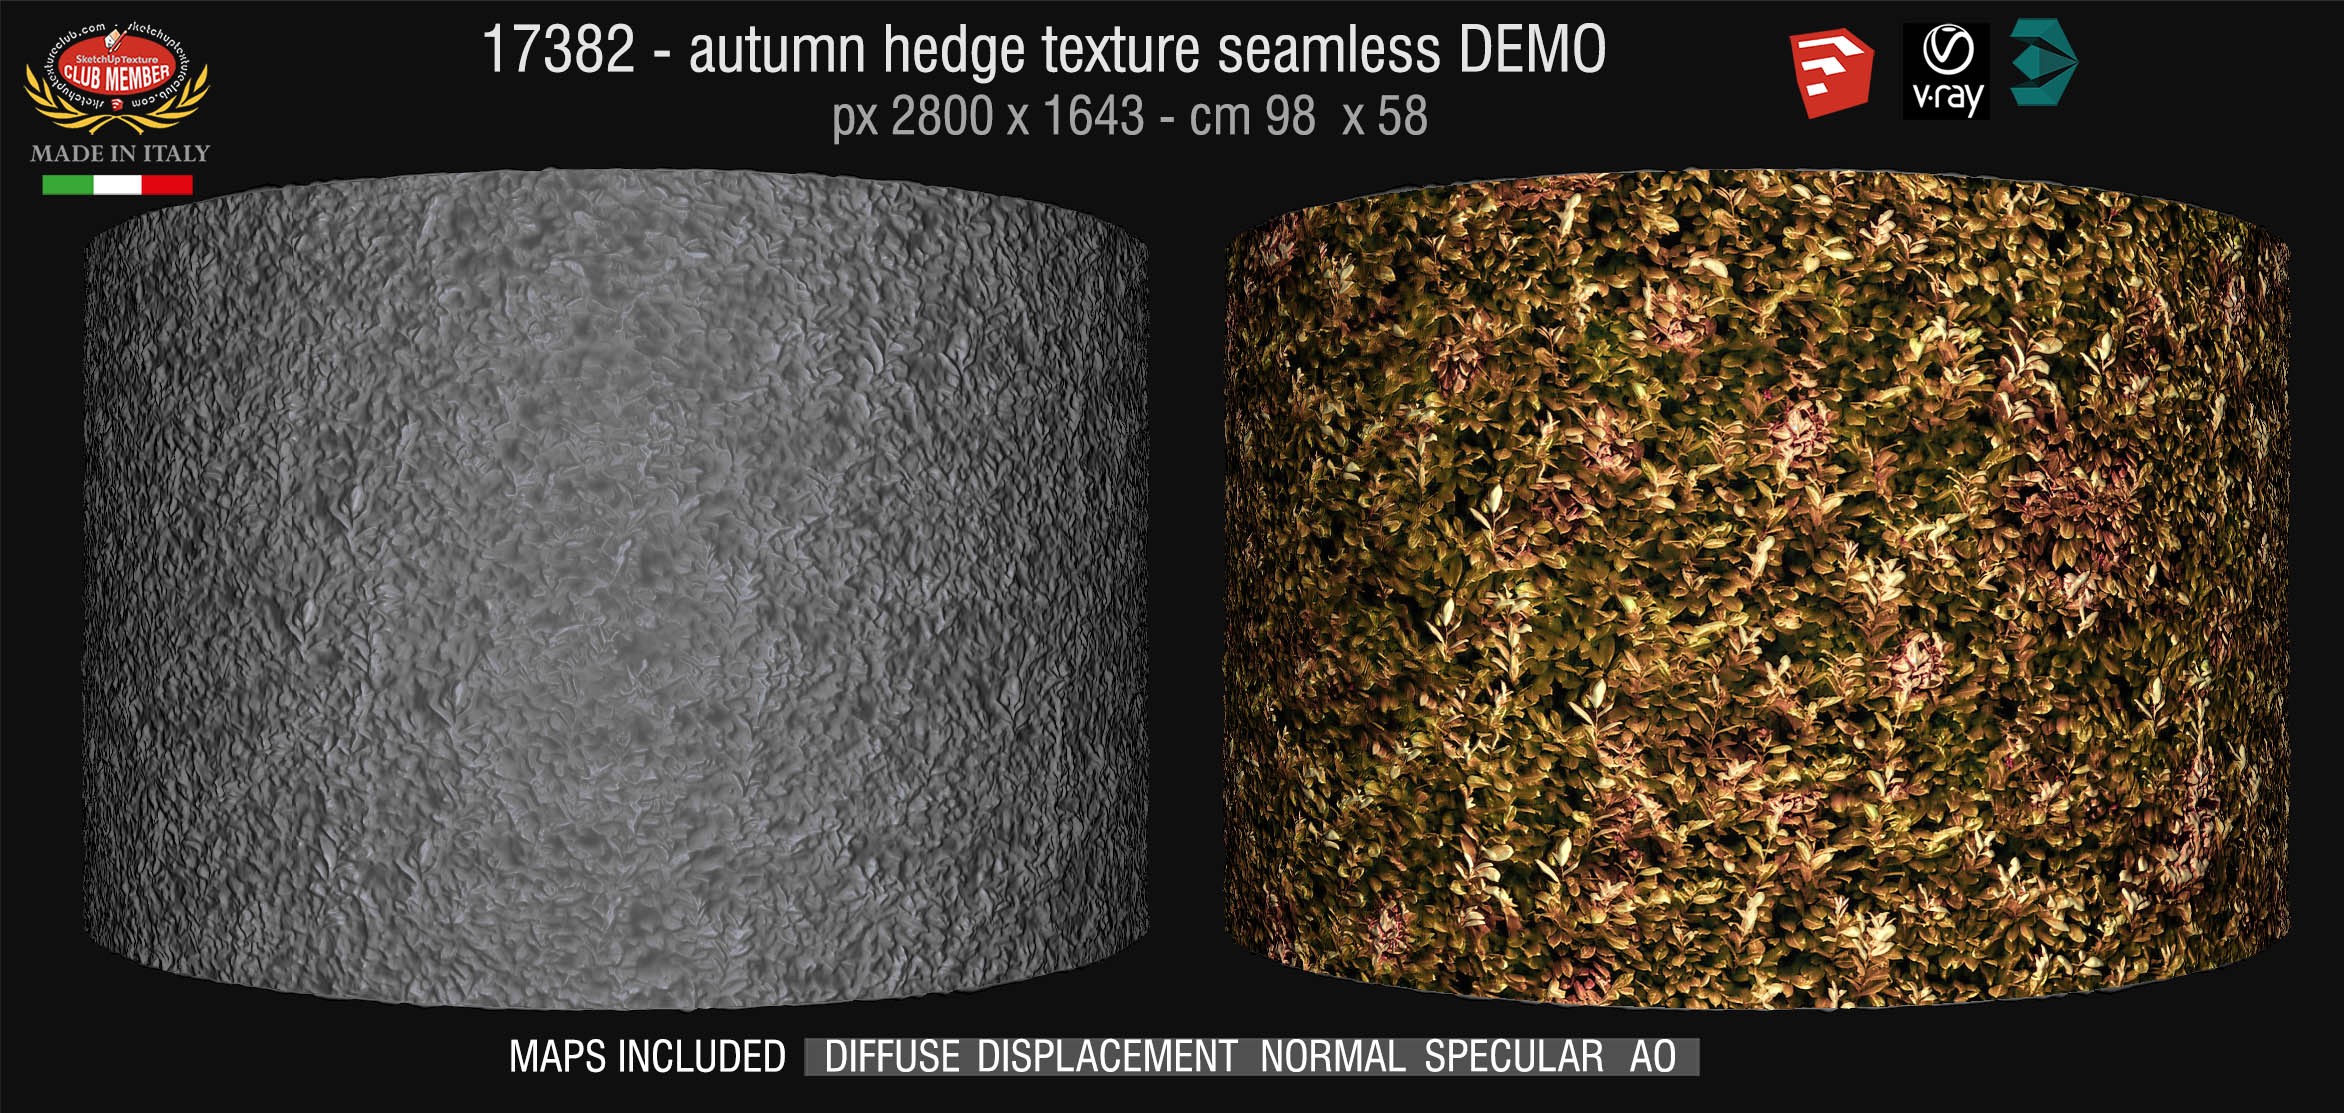 17382 HR autumn hedge texture + maps DEMO